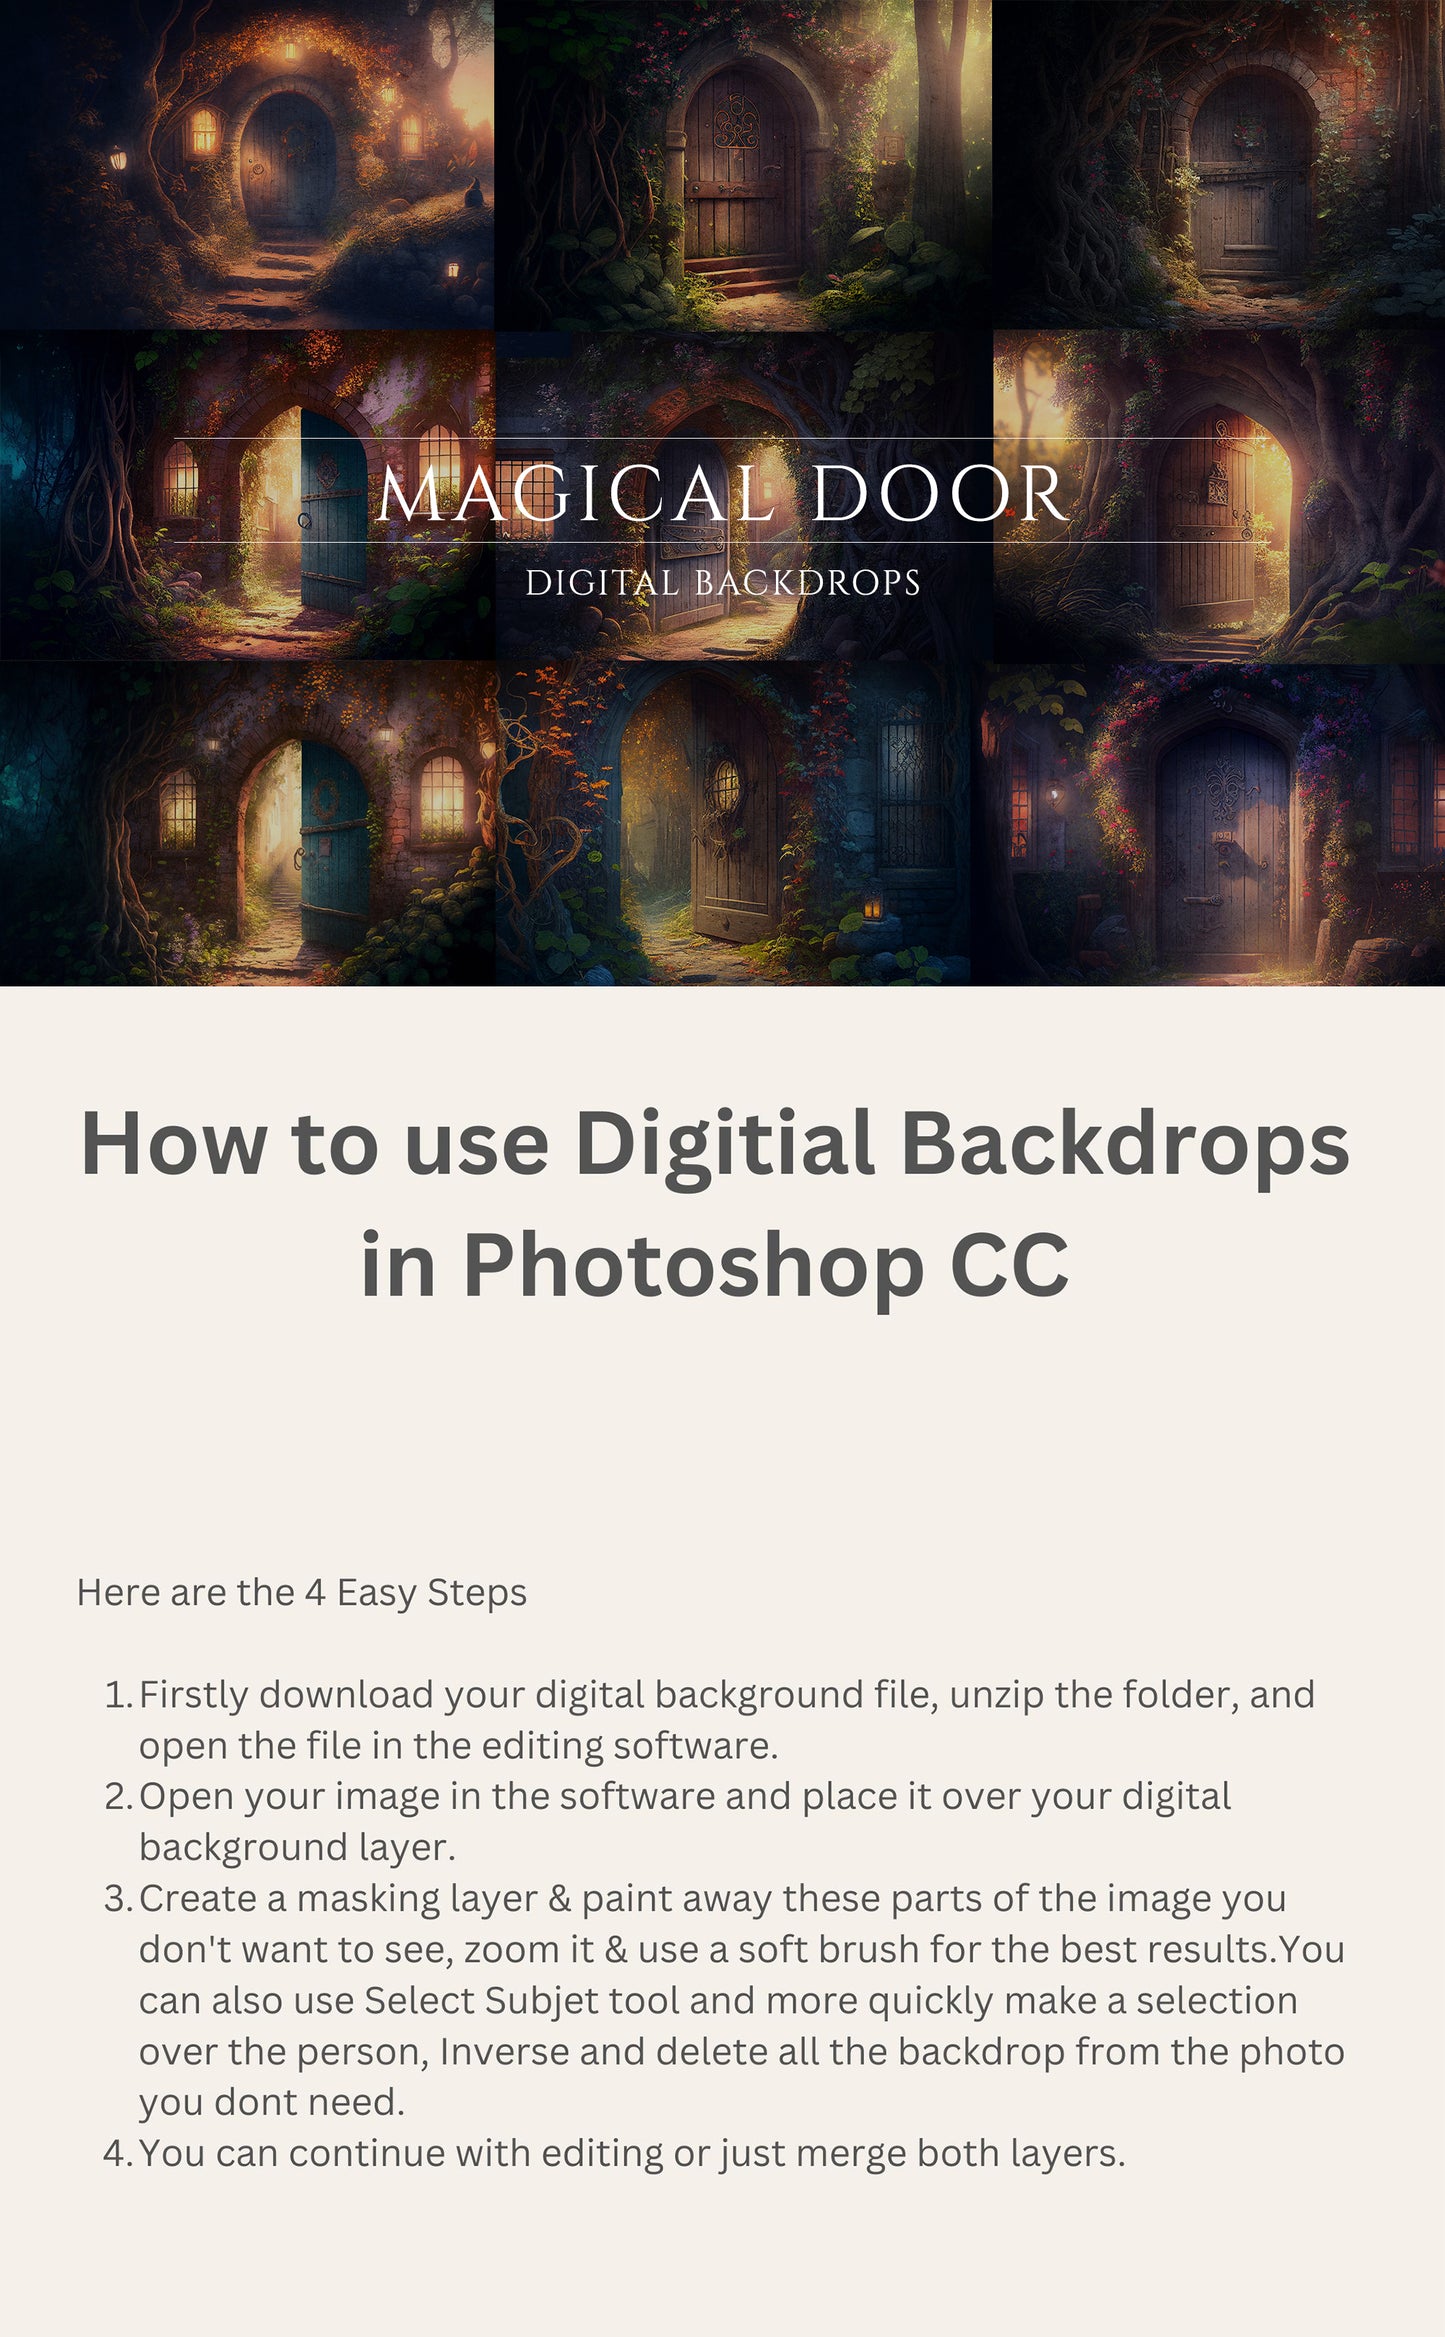 13 Magical Door Fantasy Digital Backdrops